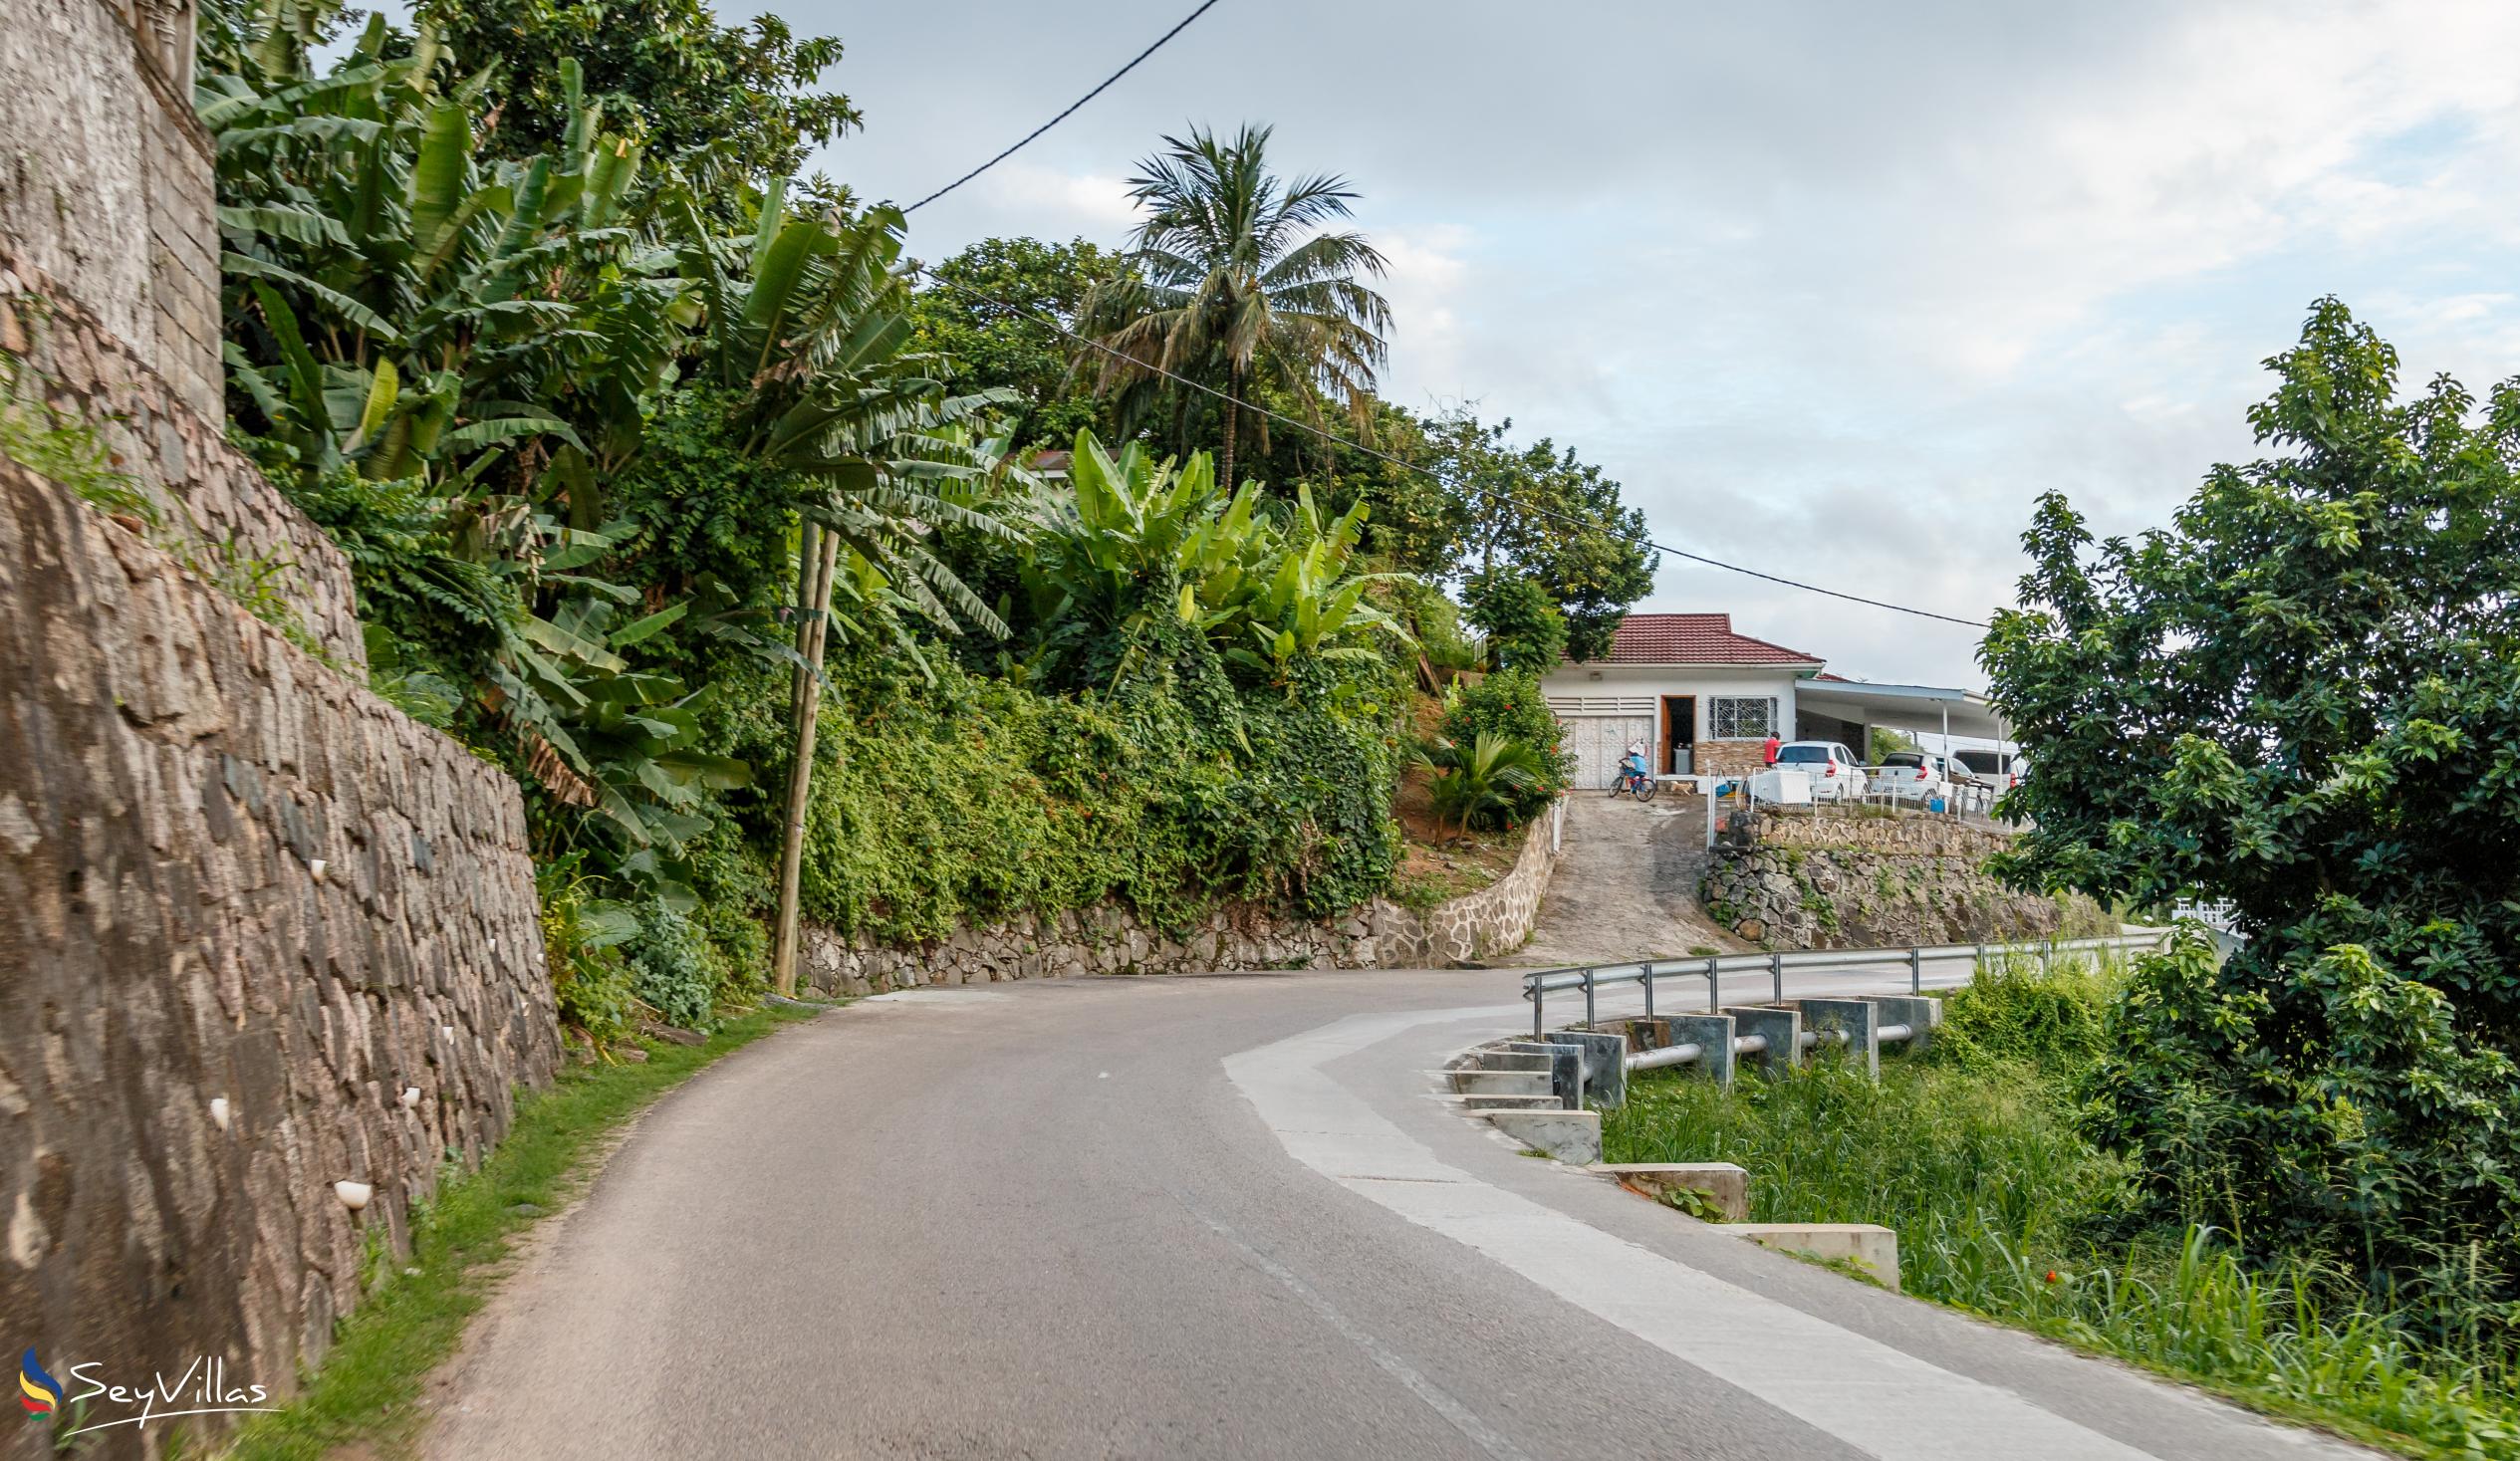 Foto 33: Takamaka Green Village - Lage - Mahé (Seychellen)